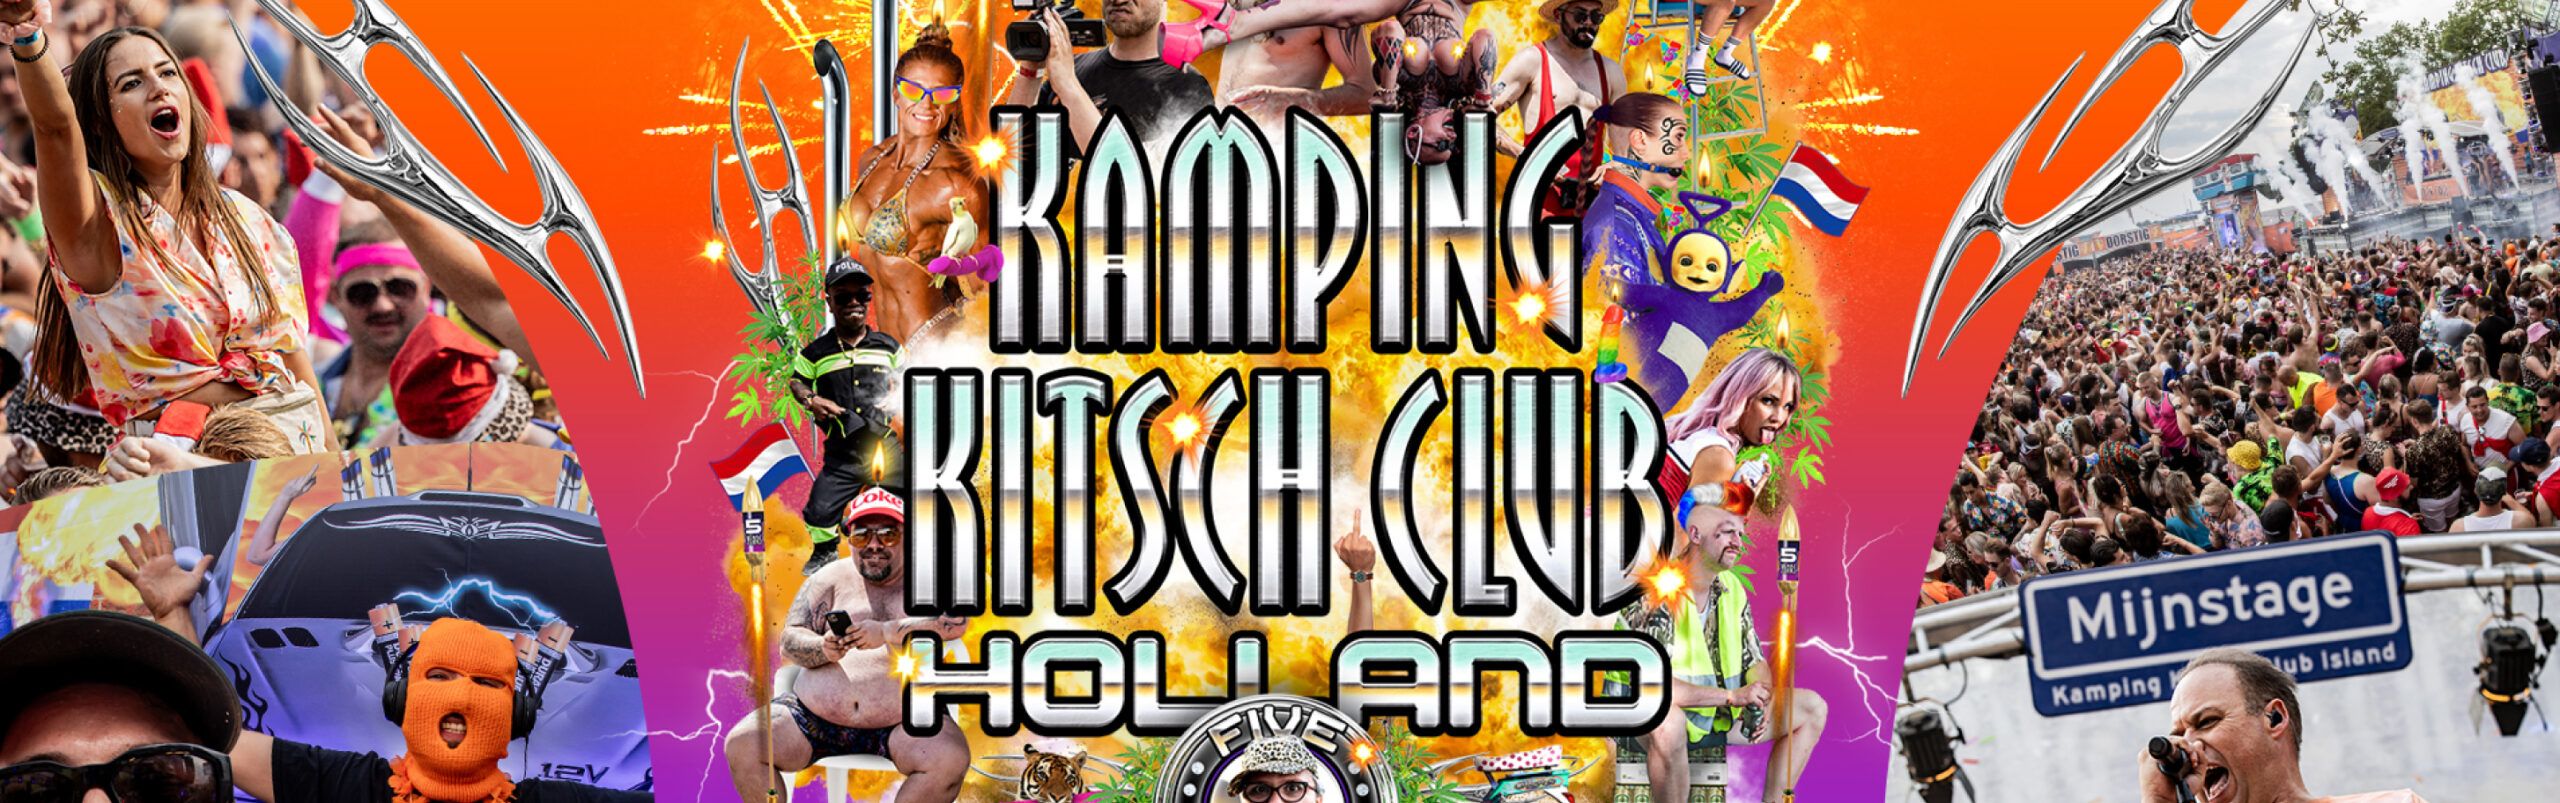 Kamping Kitsch Club Holland: 5 YRS XXL Edition header